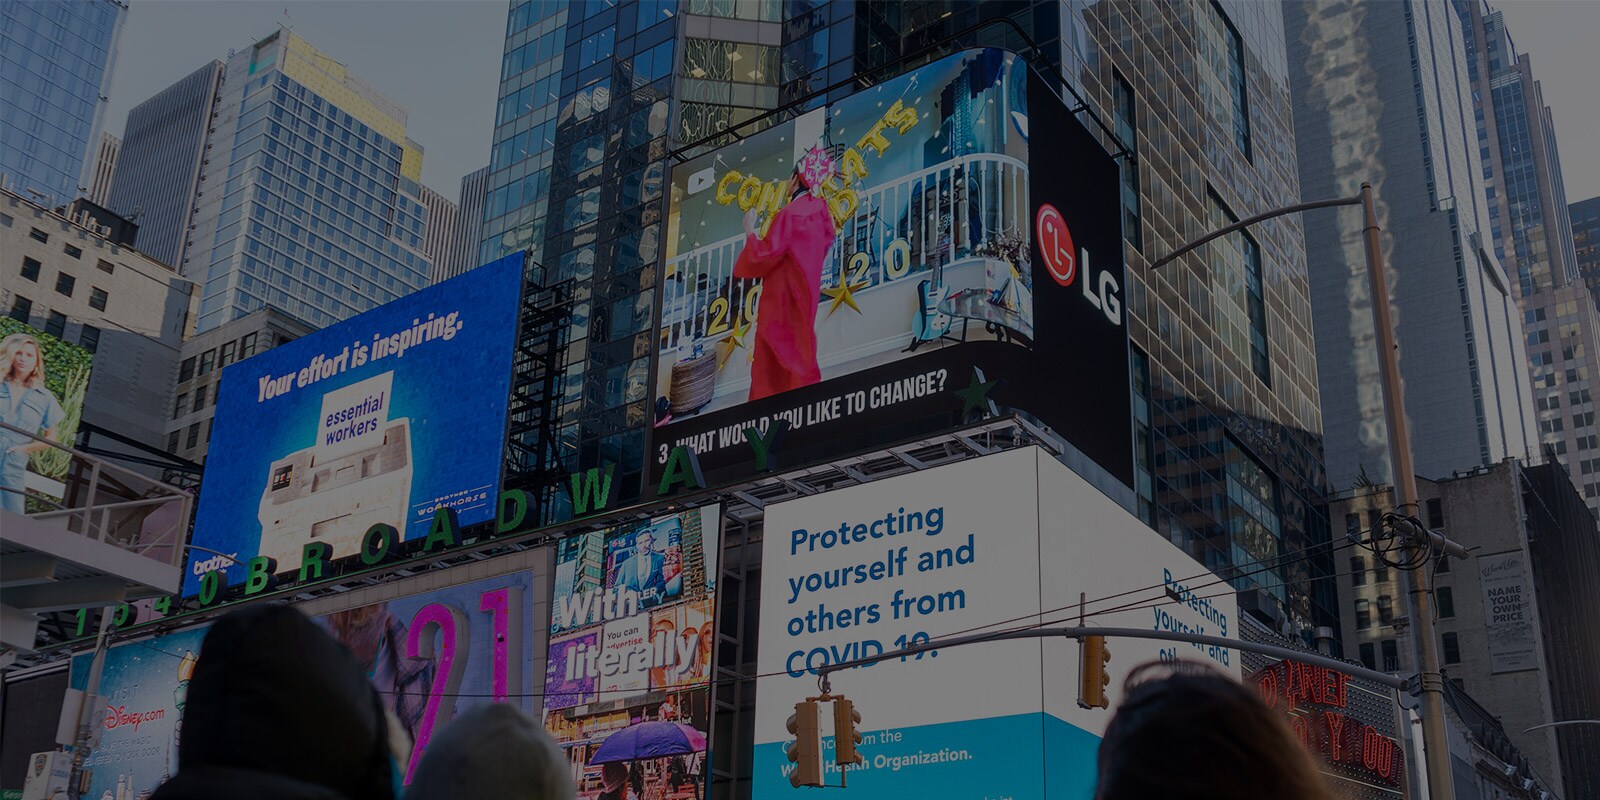 LG interactive billboard